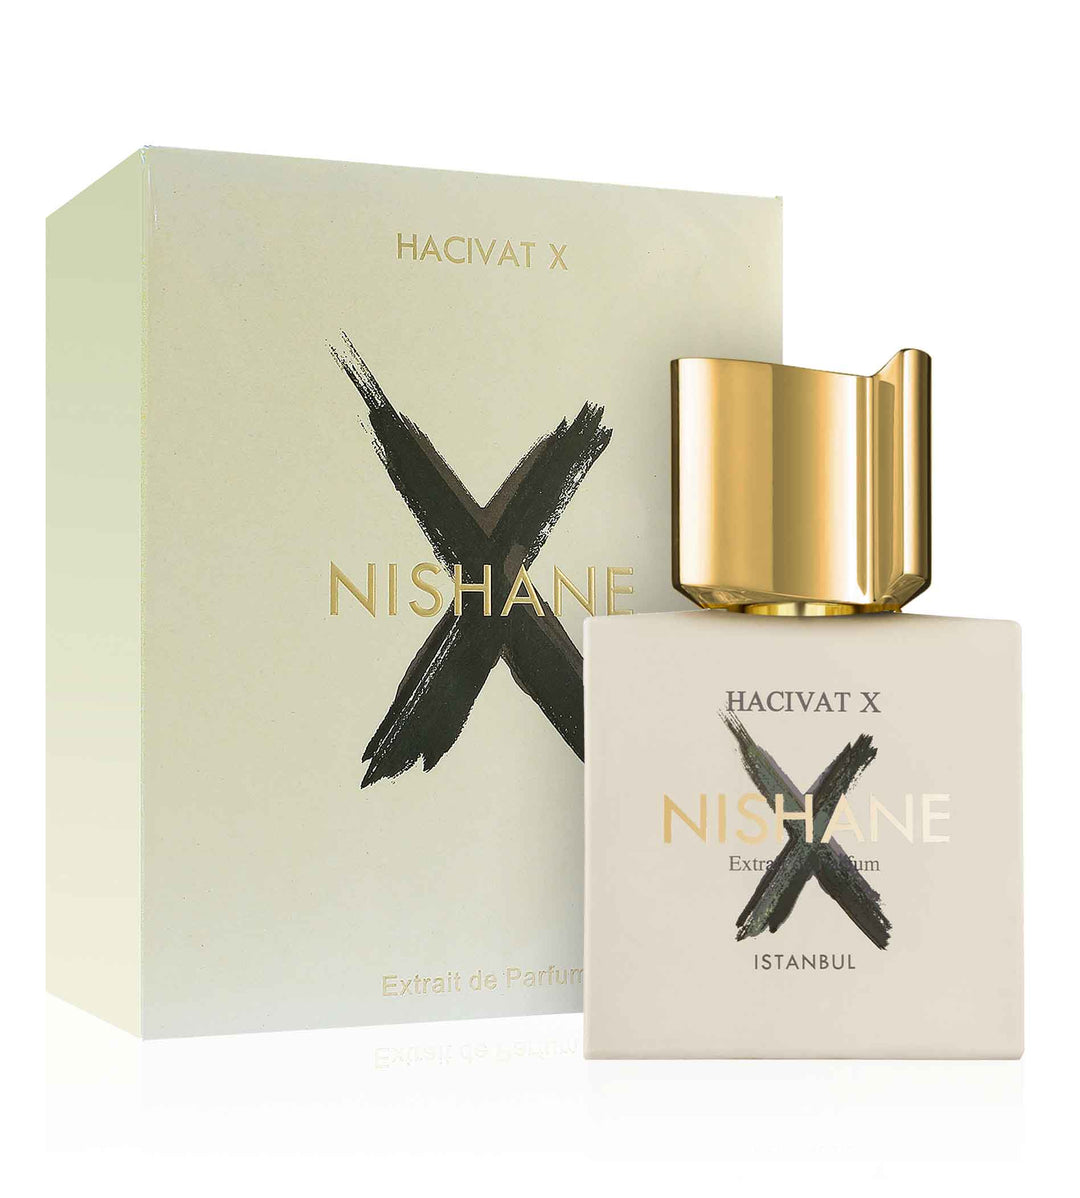 NISHANE  Hacivat X Extrait de Parfum U 50ml